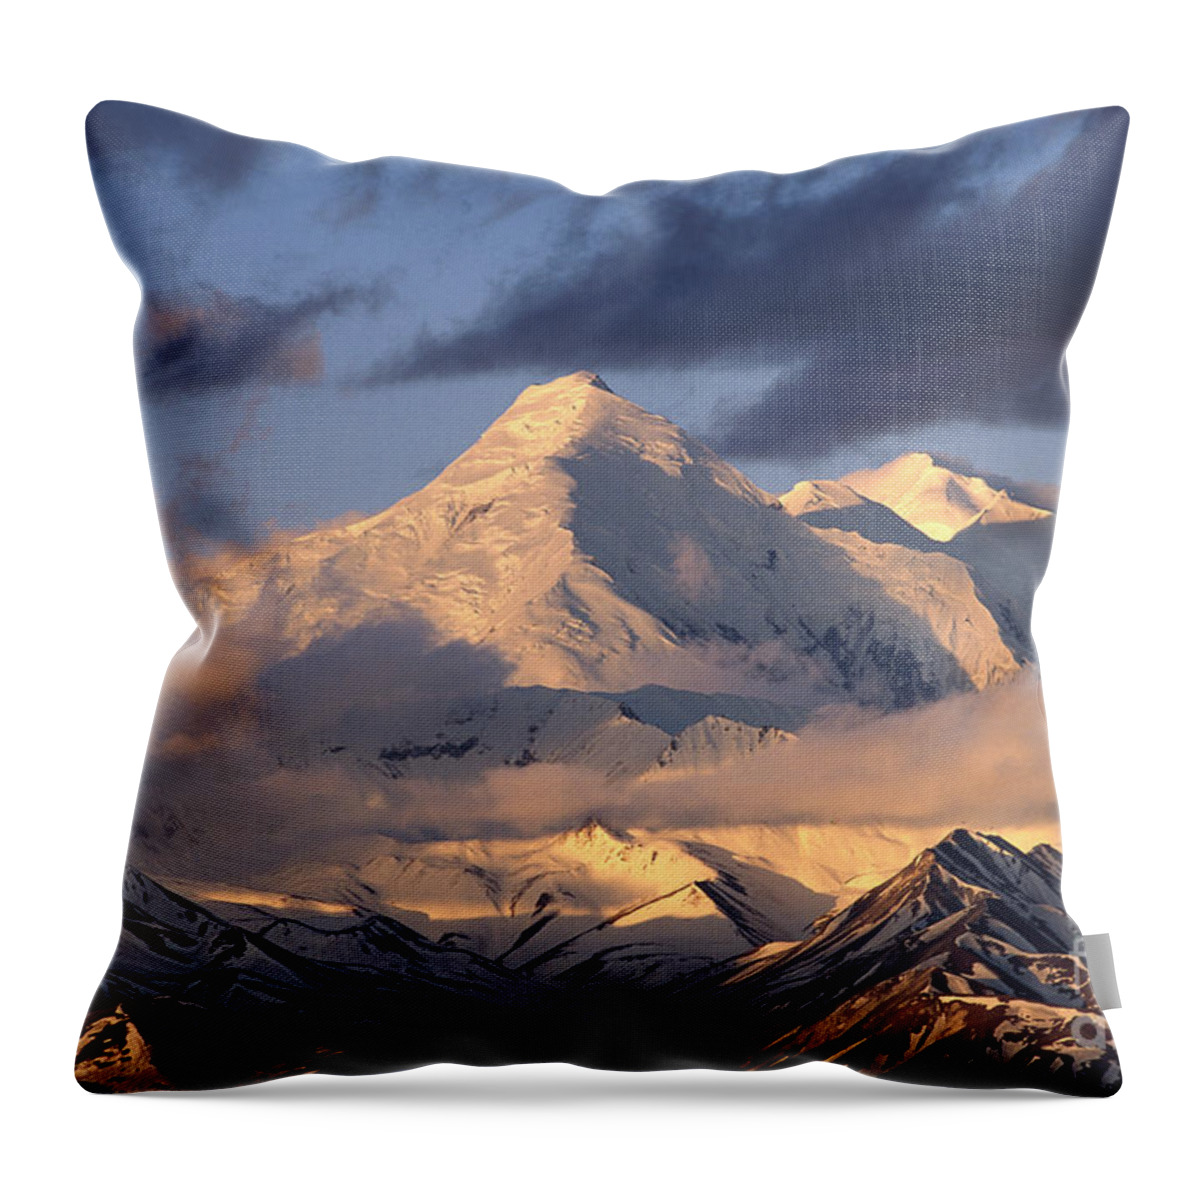 00340723 Throw Pillow featuring the photograph Alaska Range Morning by Yva Momatiuk John Eastcott